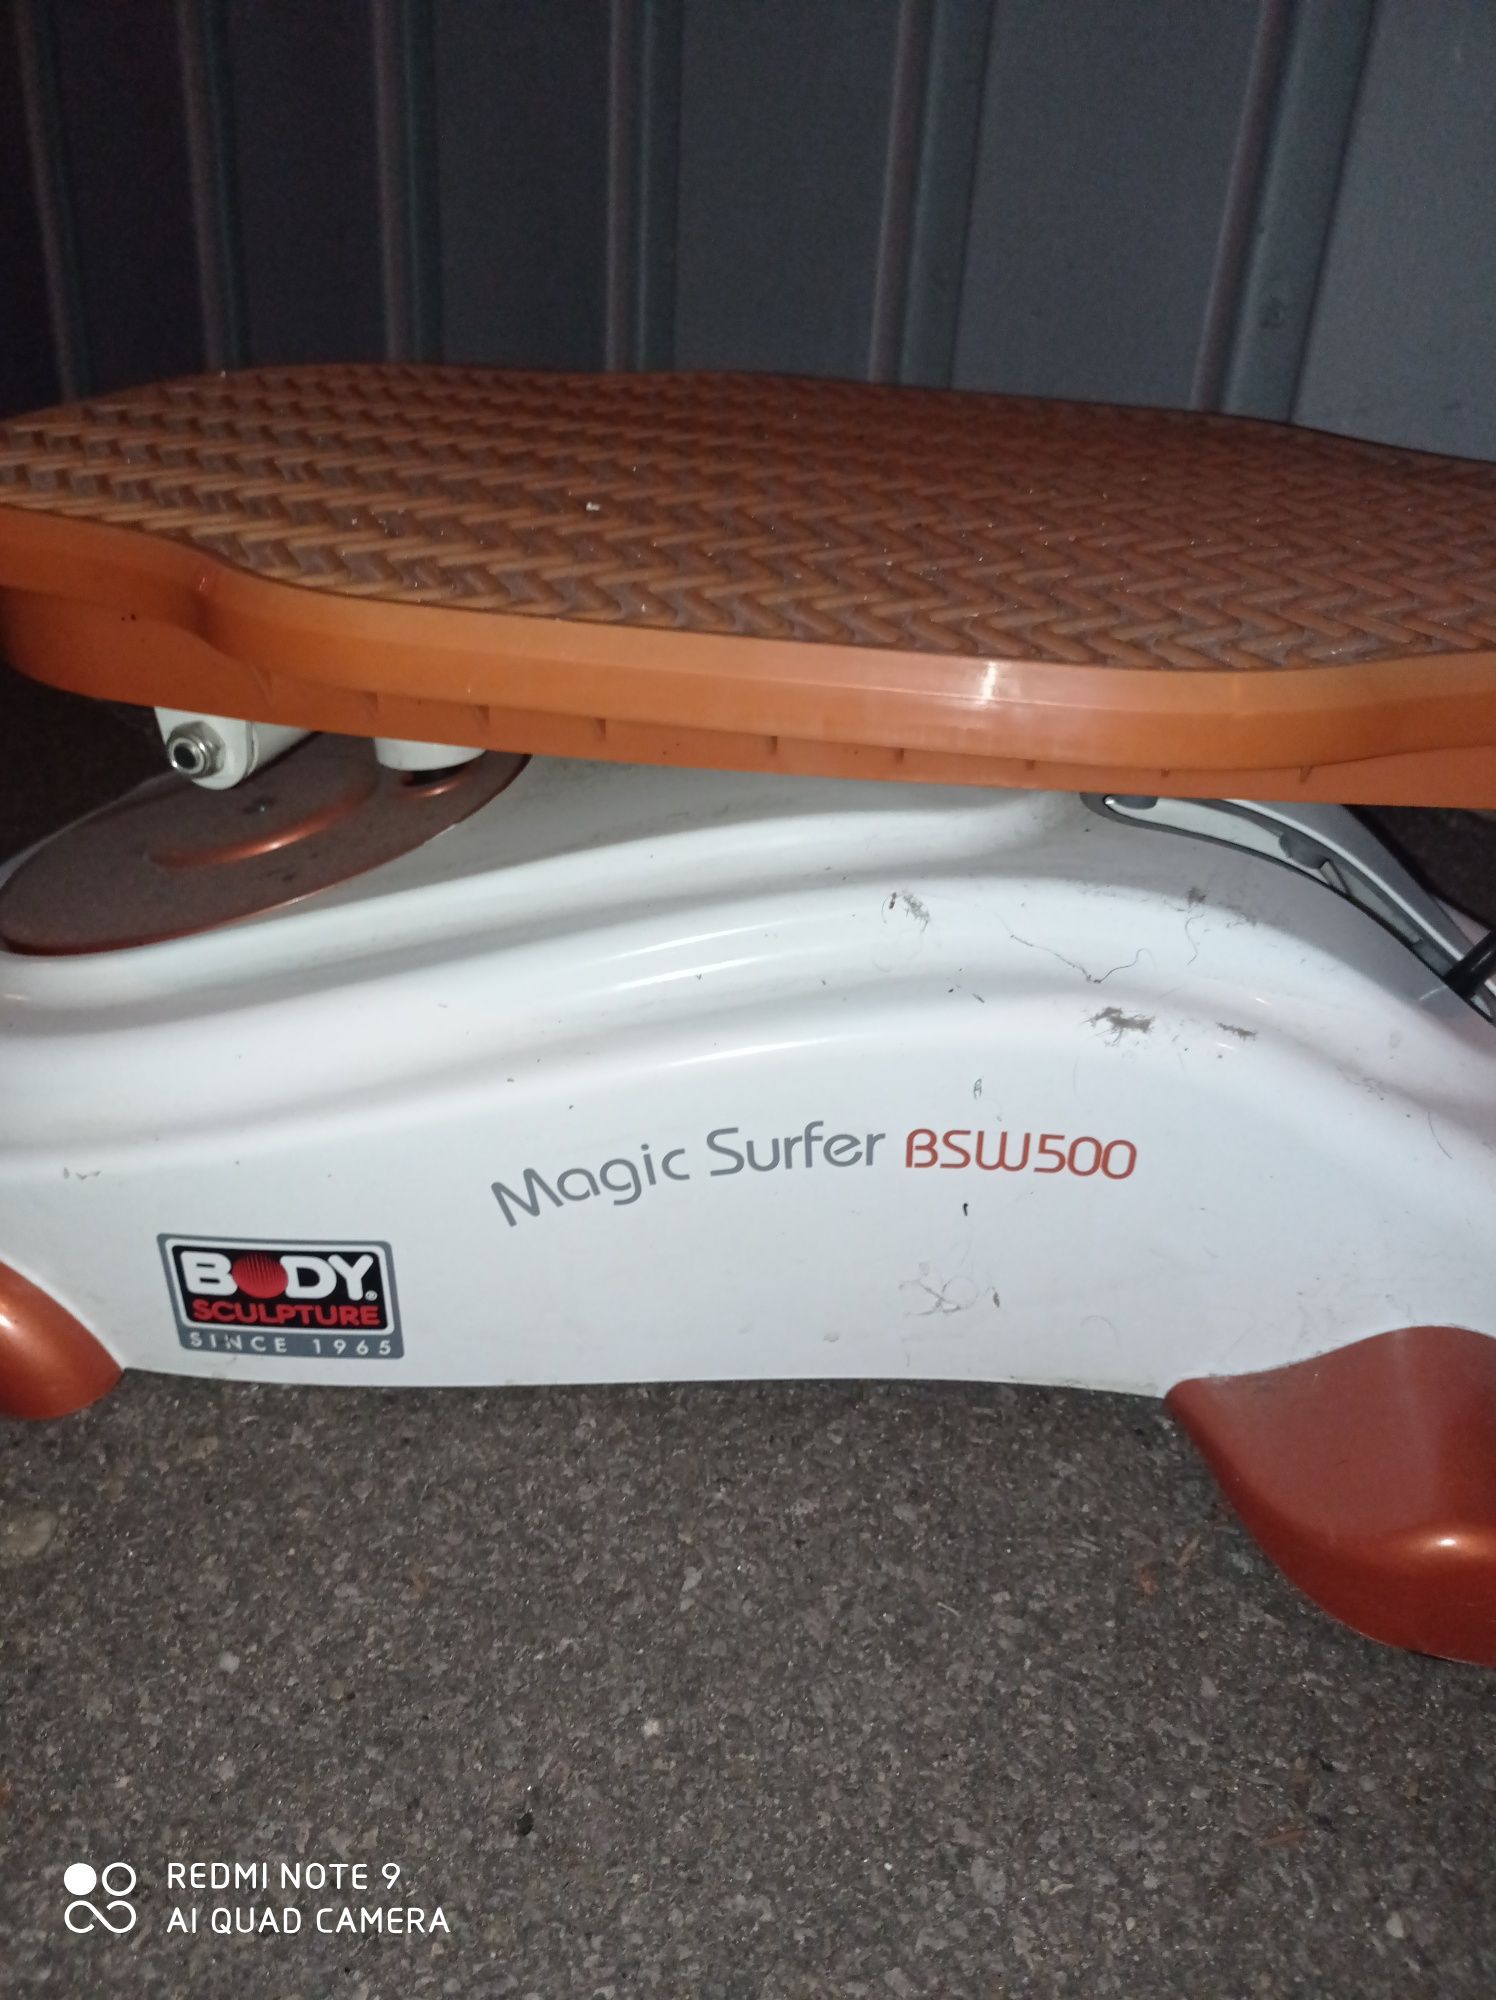 Oferta simulator surf Magic Surfer BSW 500 la 150 lei